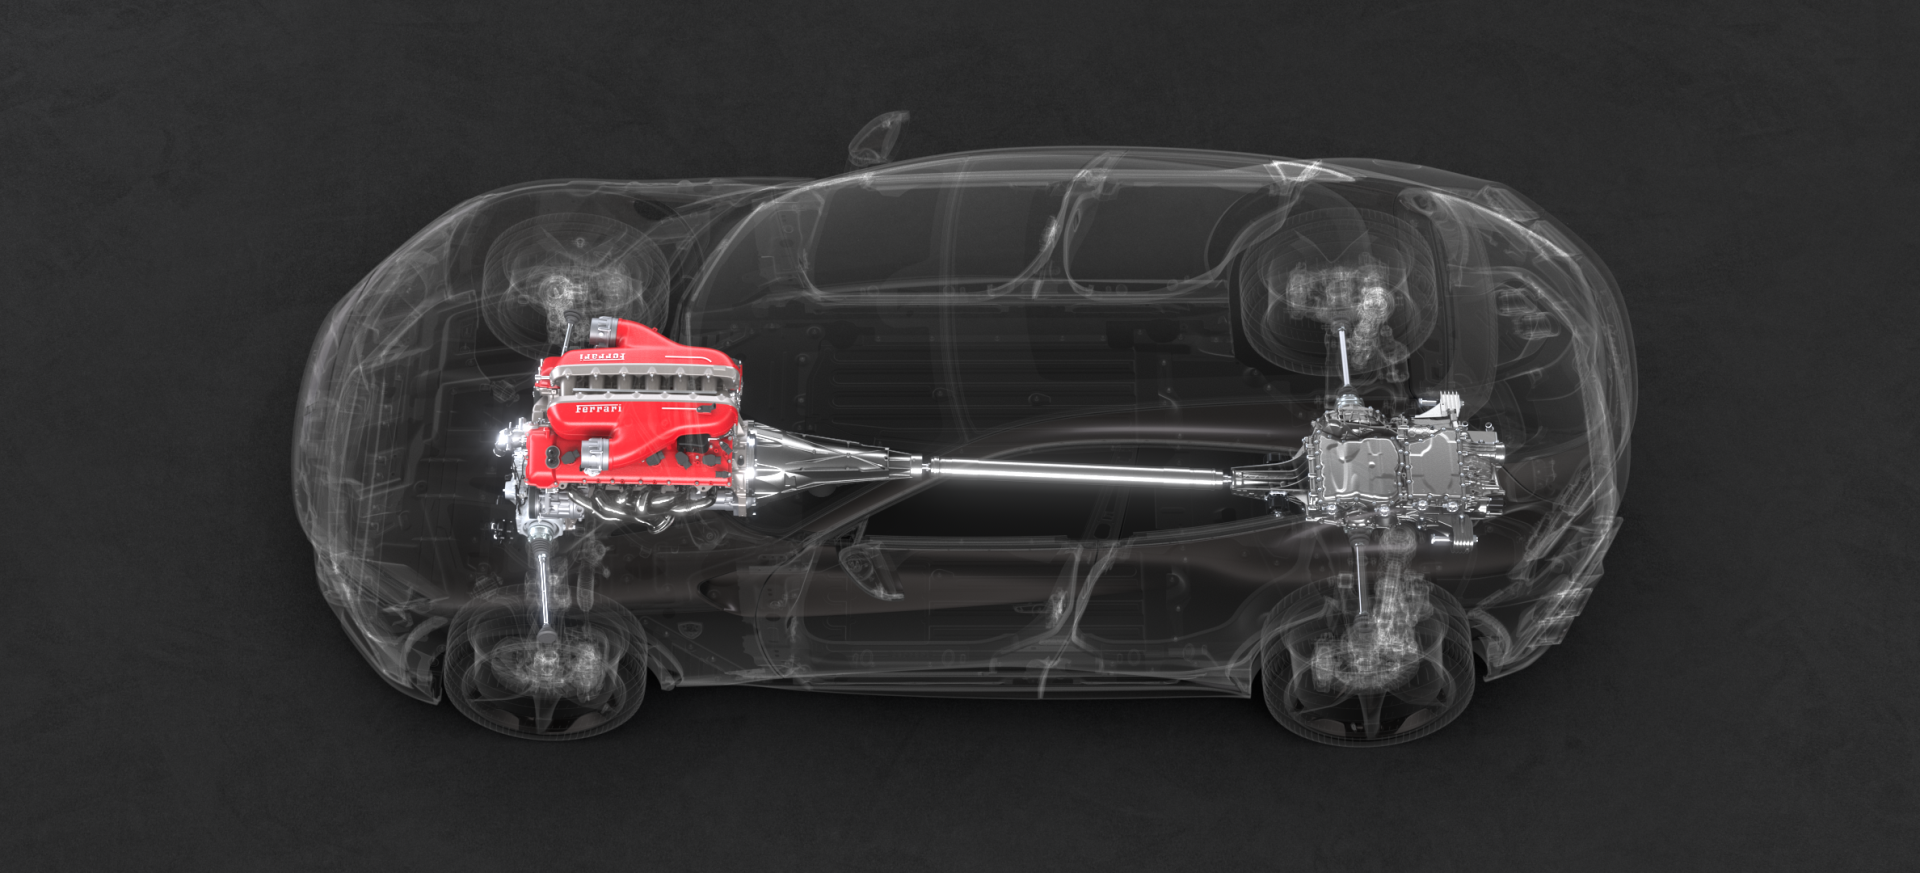 Ferrari Purosangue: Μία πρακτική καθαρόαιμη Ferrari